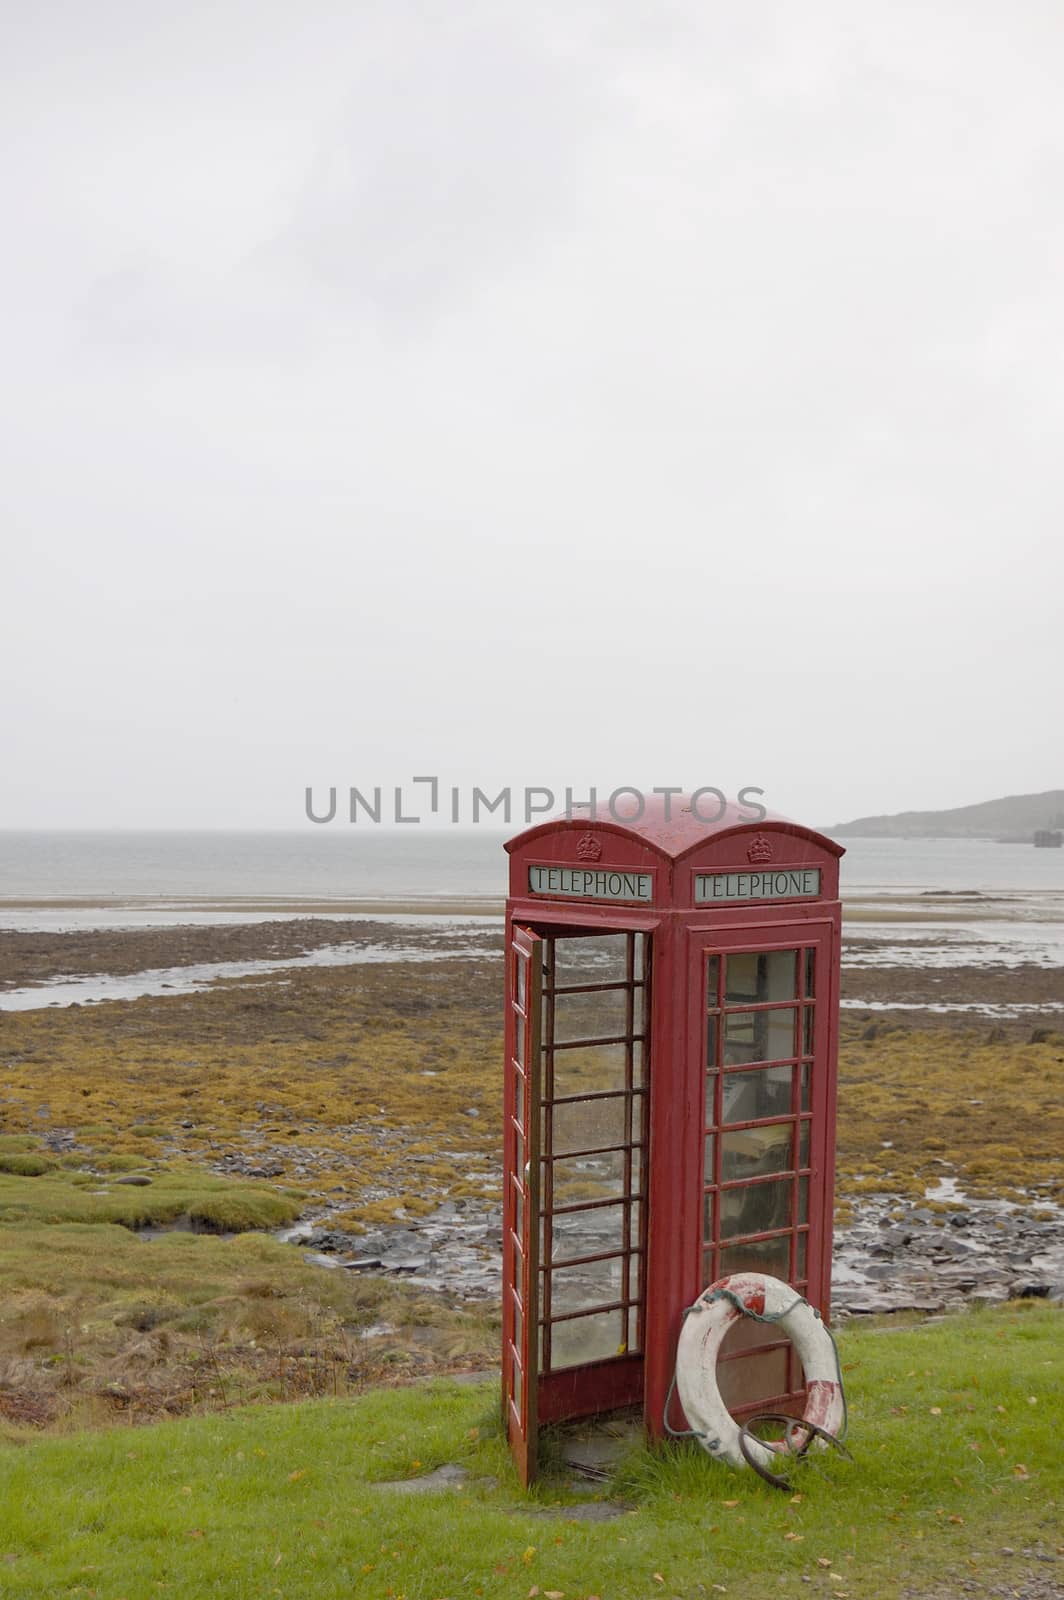 Telephone box and lifebelt, on the Isle of Rum